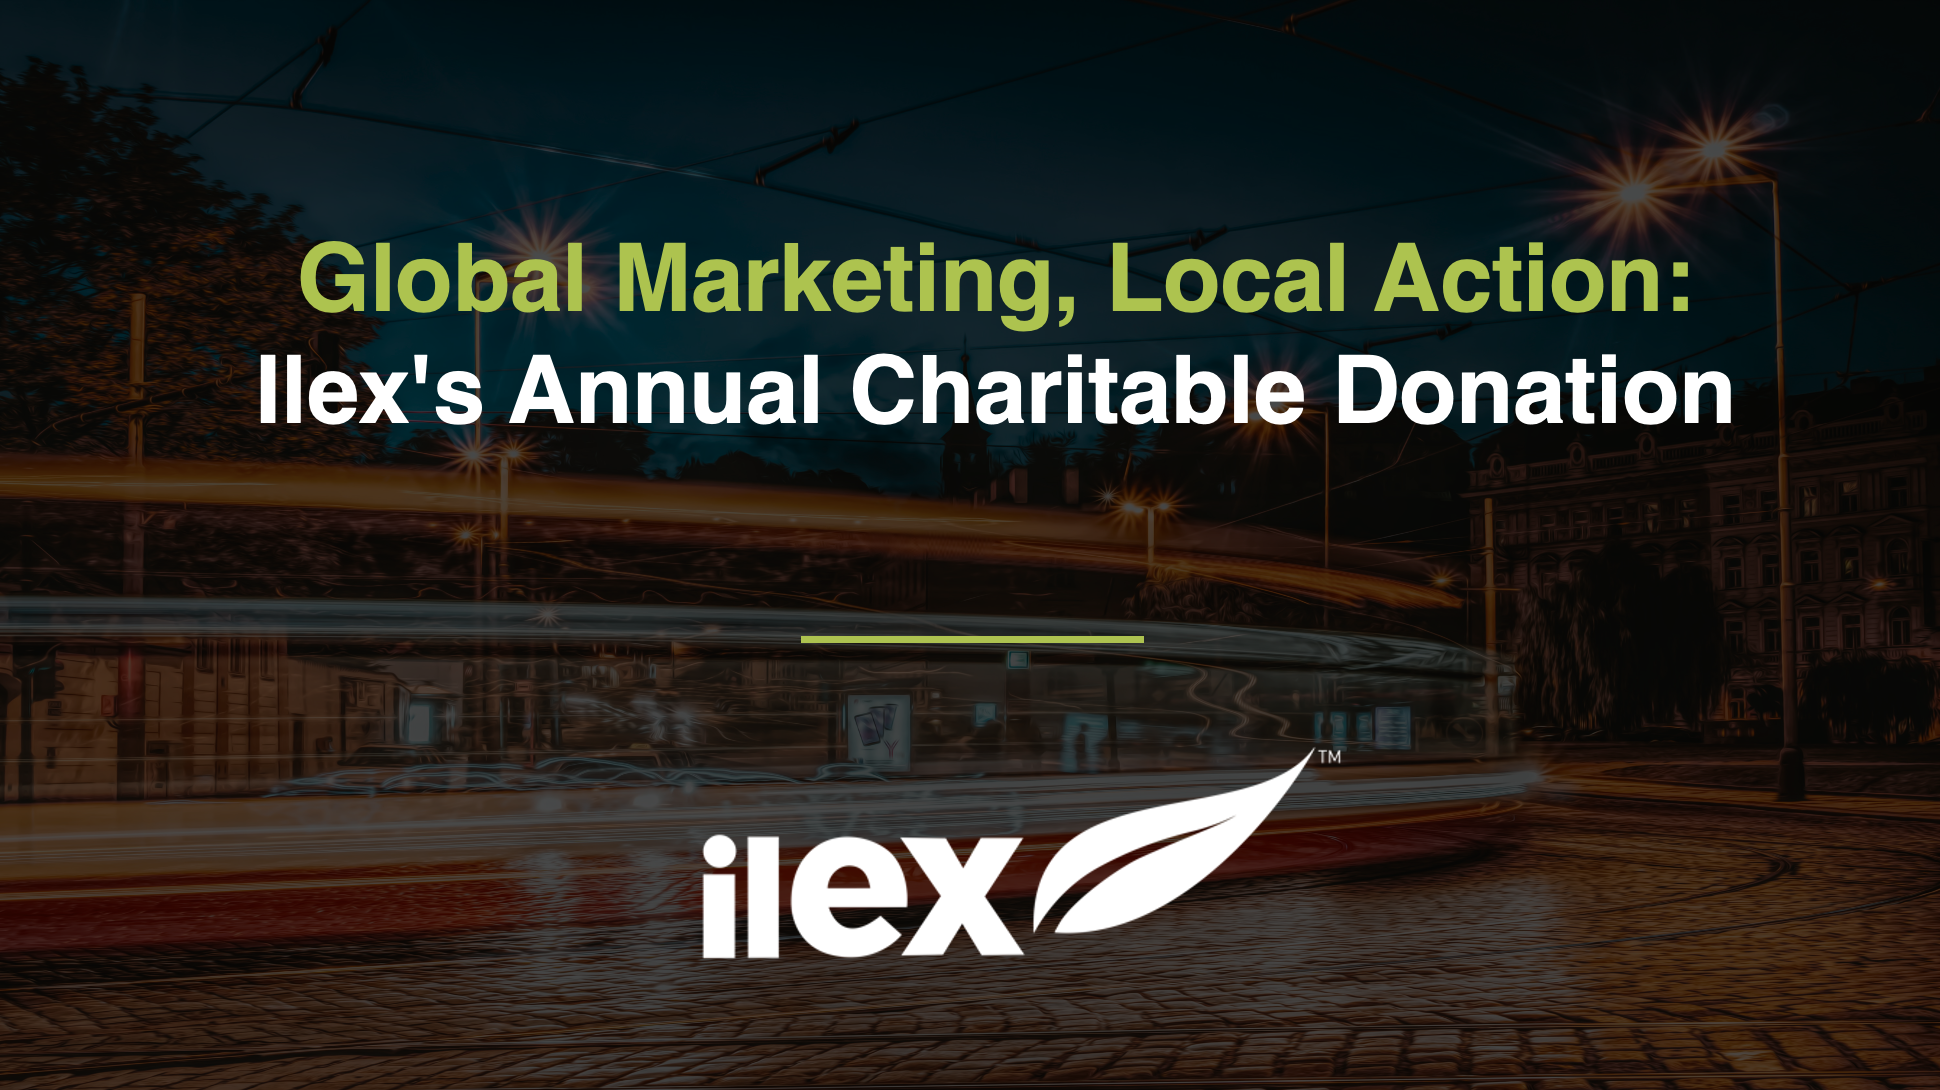 Global Marketing, Local Action: Ilex's Annual Charitable Donation